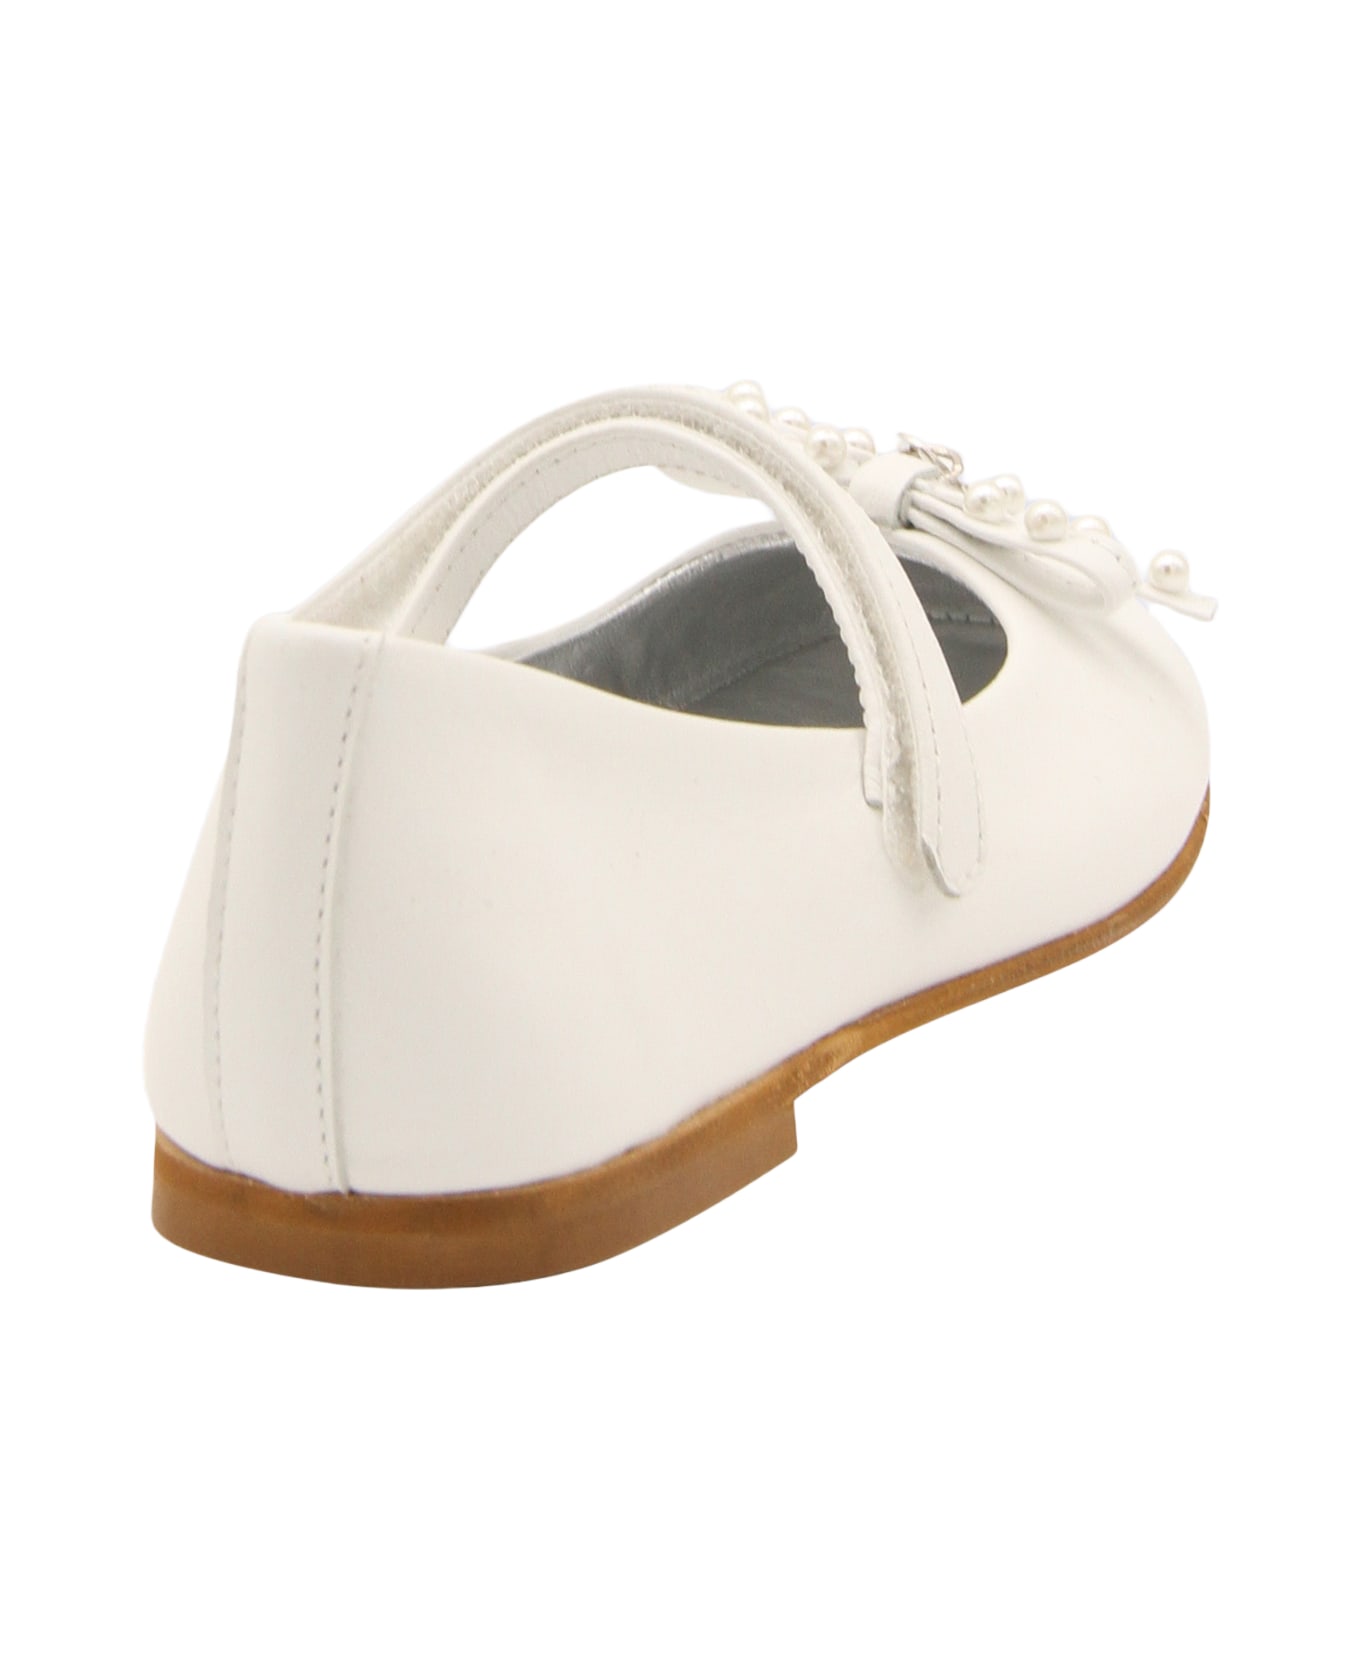 Monnalisa White Leather Flats - Cream シューズ